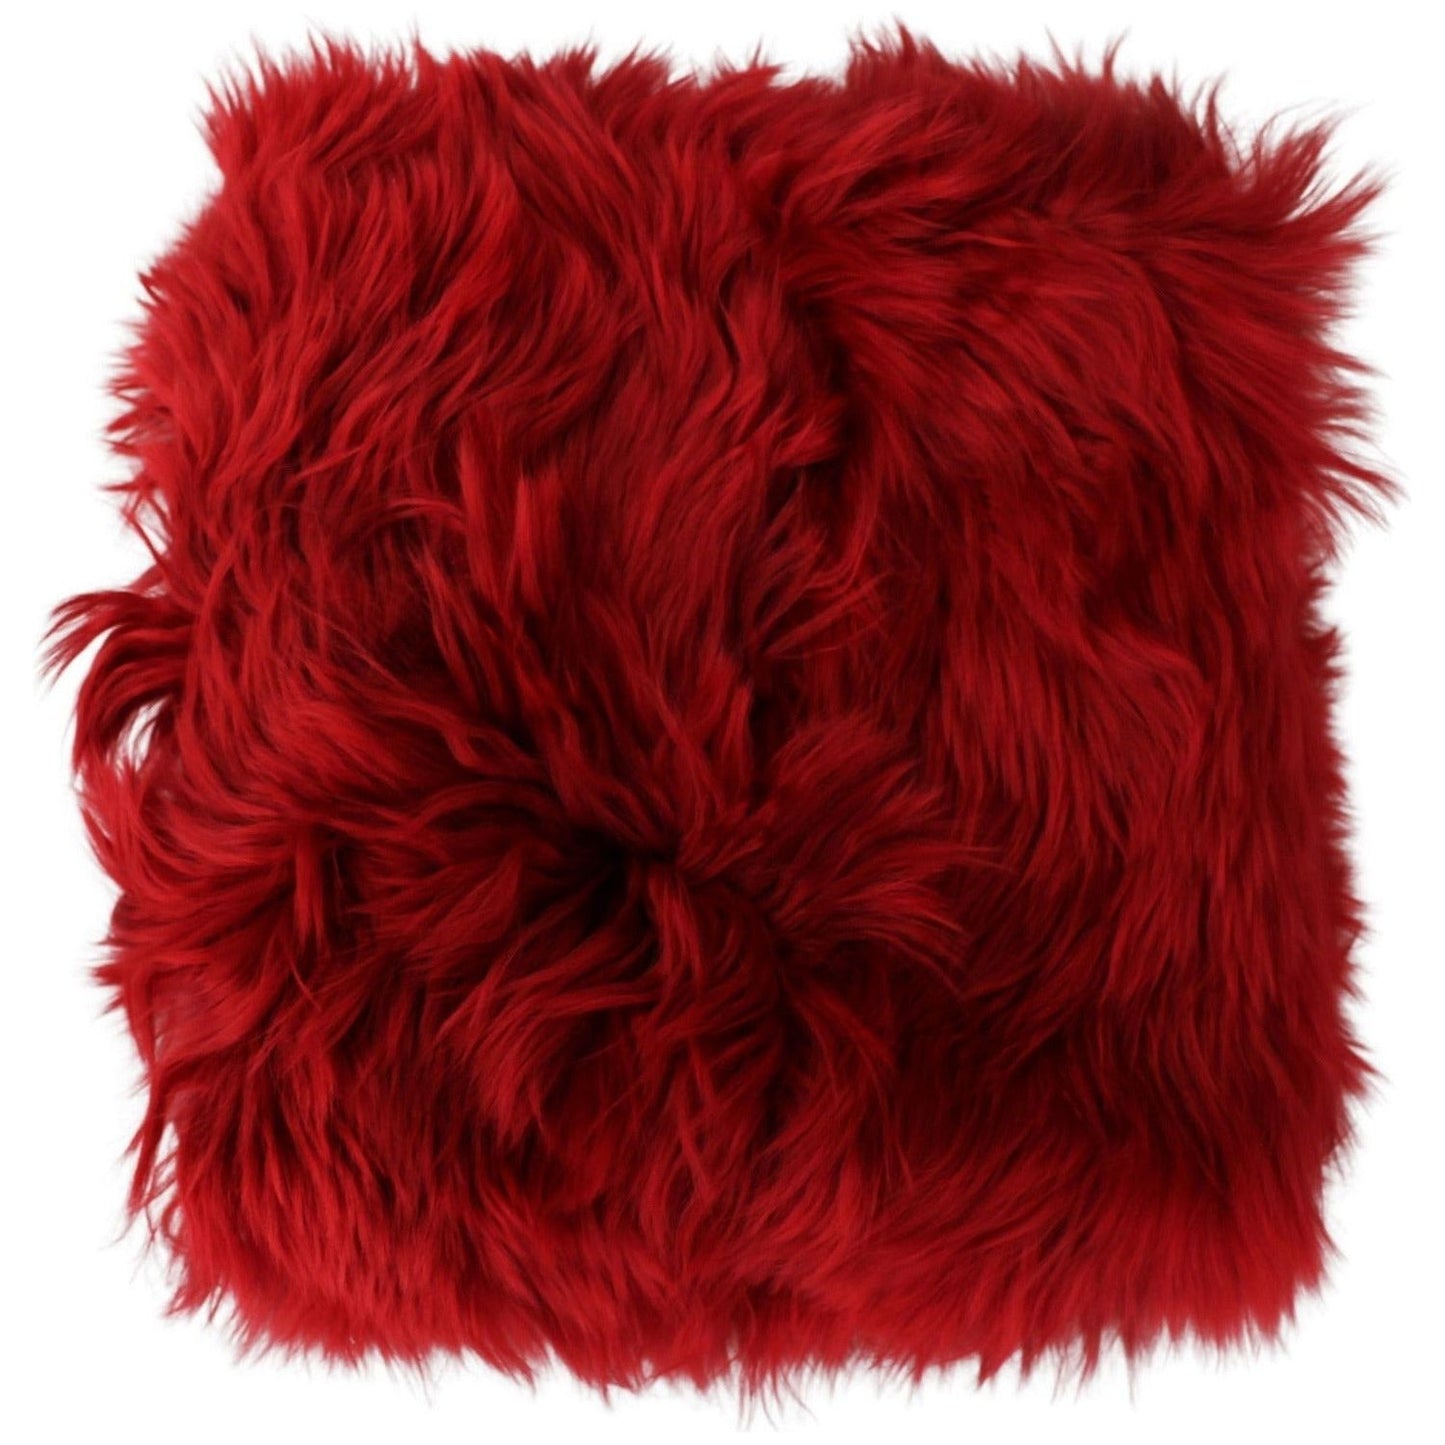 Dolce & Gabbana Elegant Red Alpaca Fur Neck Wrap Scarf red-alpaca-leather-fur-neck-wrap-shawl-scarf